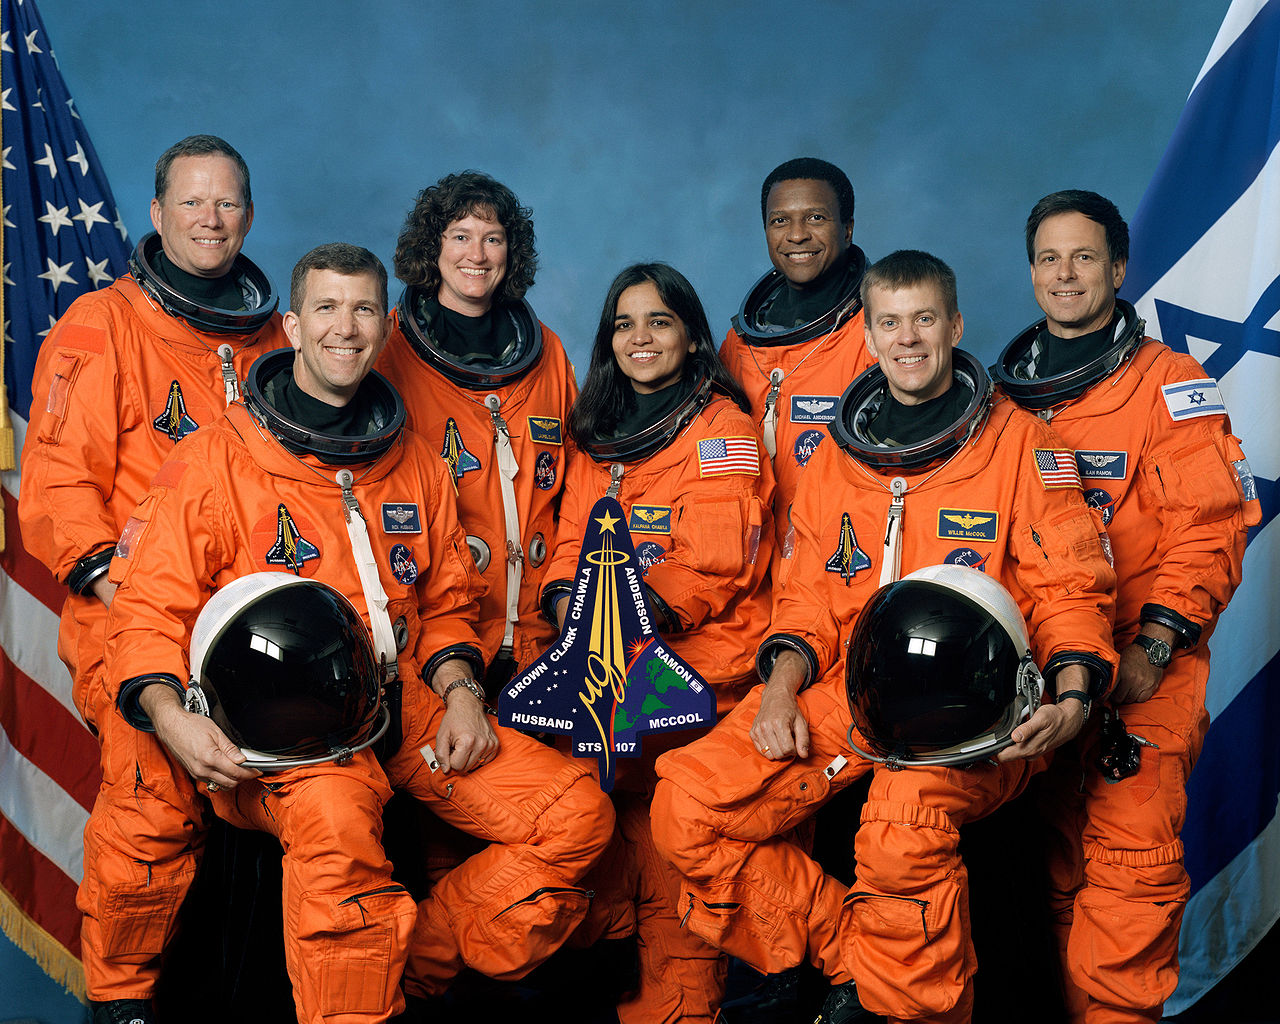 Front, left to right: COL Richard D. Husband, USAF, Kalpana Chawla, CDR William C. McCool, USN. Back, left to right: CAPT David M. Brown, MD, USN, CAPT Laurel Clark, MD, USN, LCOL Michael P. Anderson, USAF, COL Ilan Ramon, IAF. (NASA)